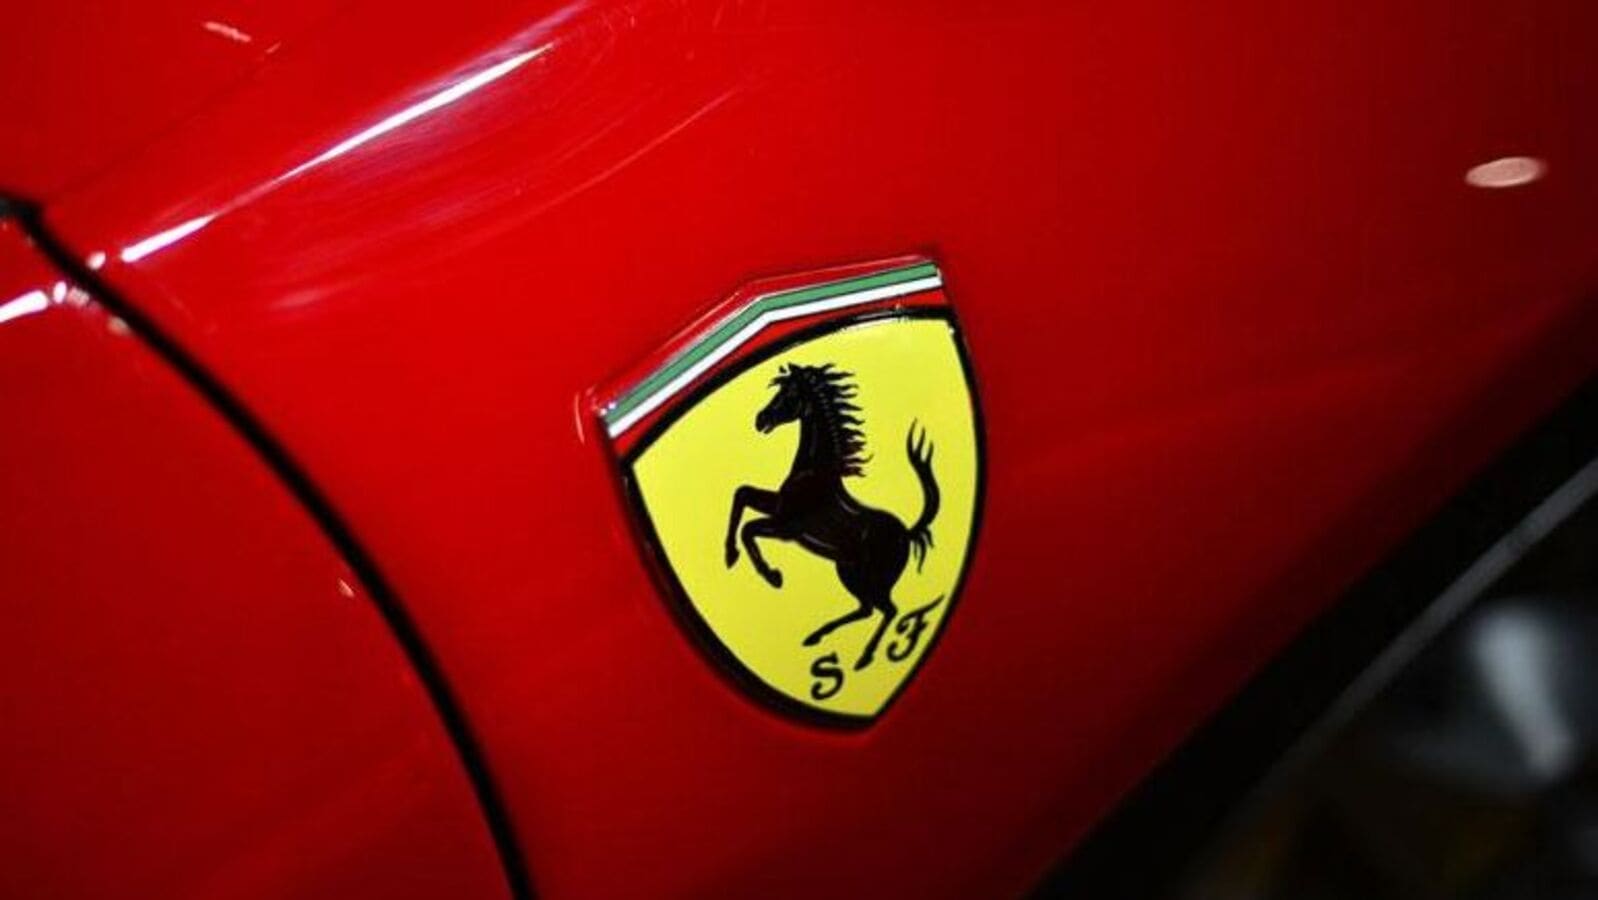 Ferrari Virtual Race - Download